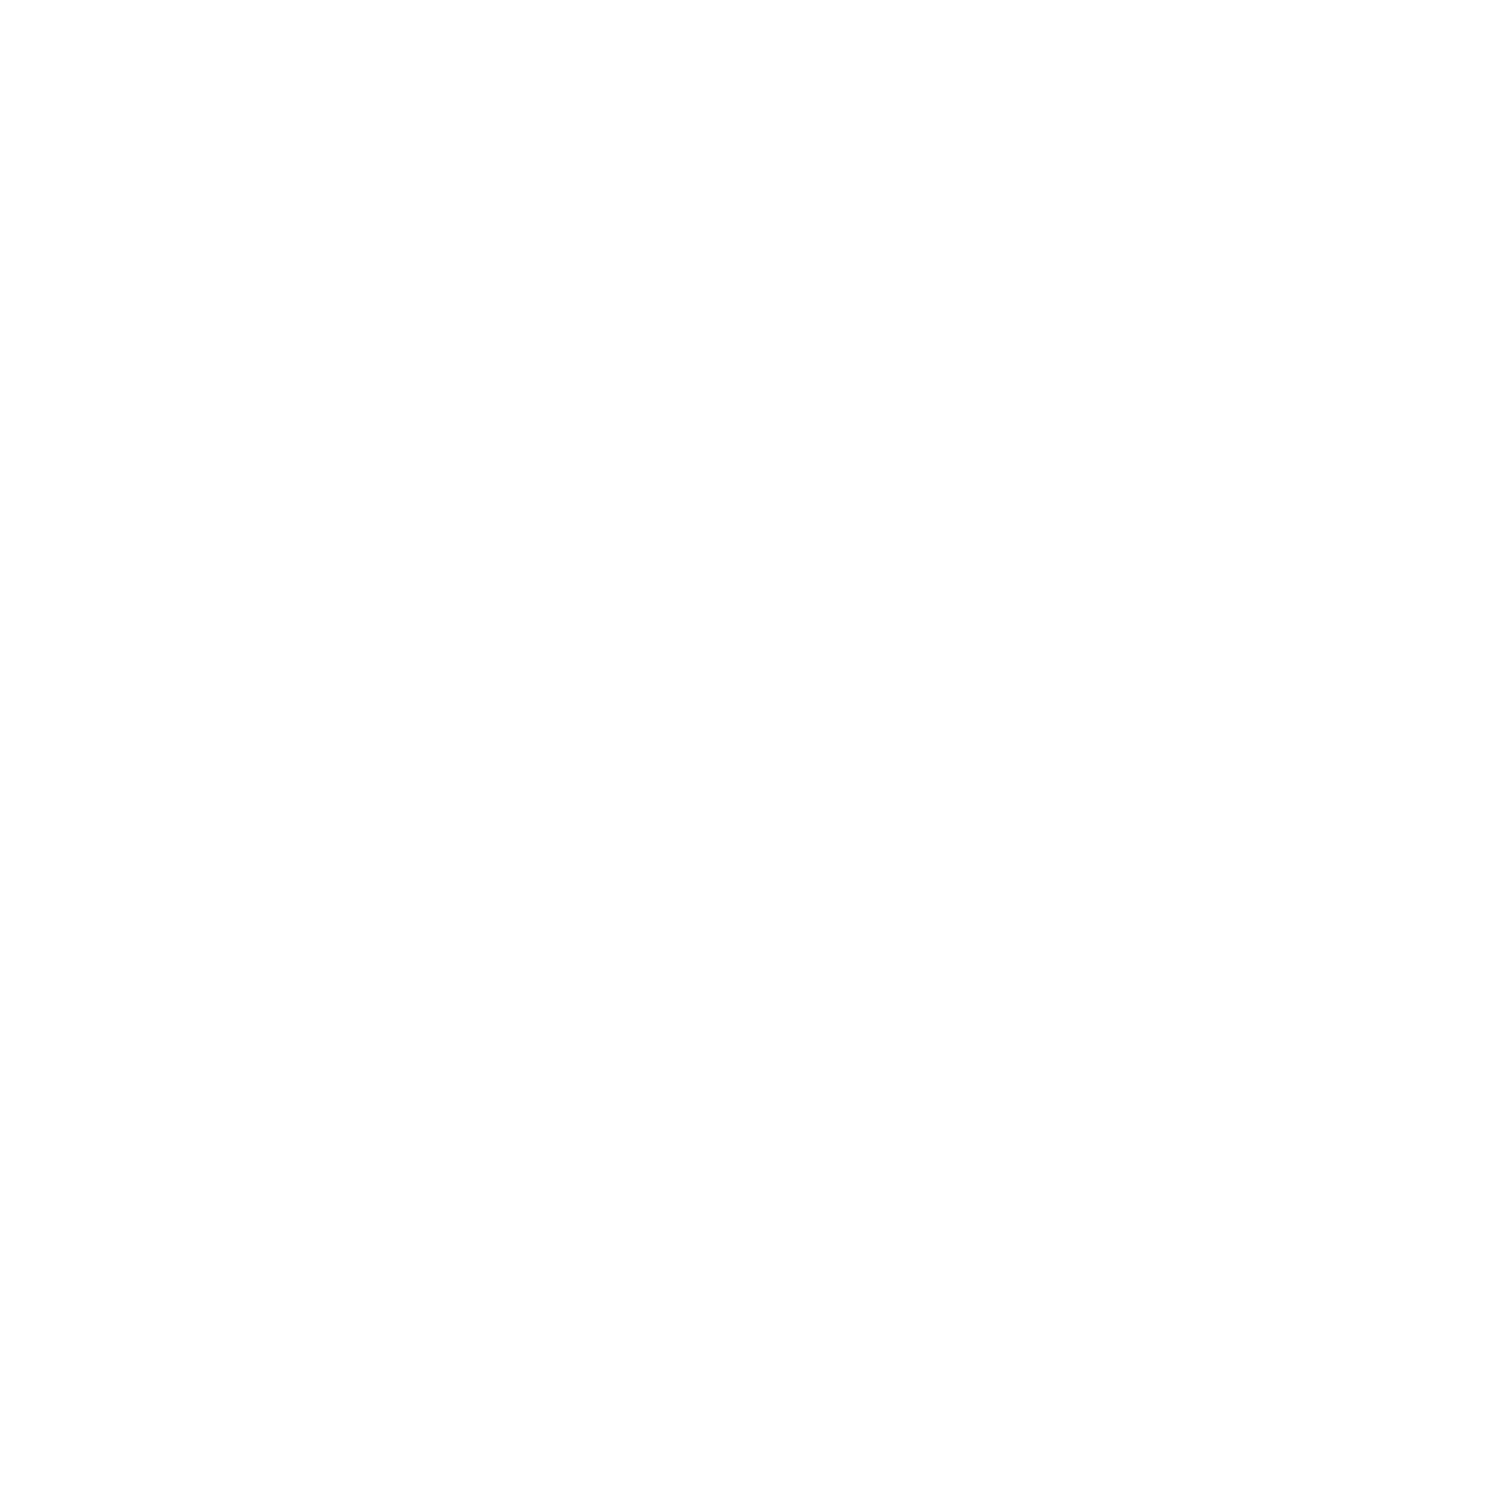 Dan Stagani Personal Training & Wellness